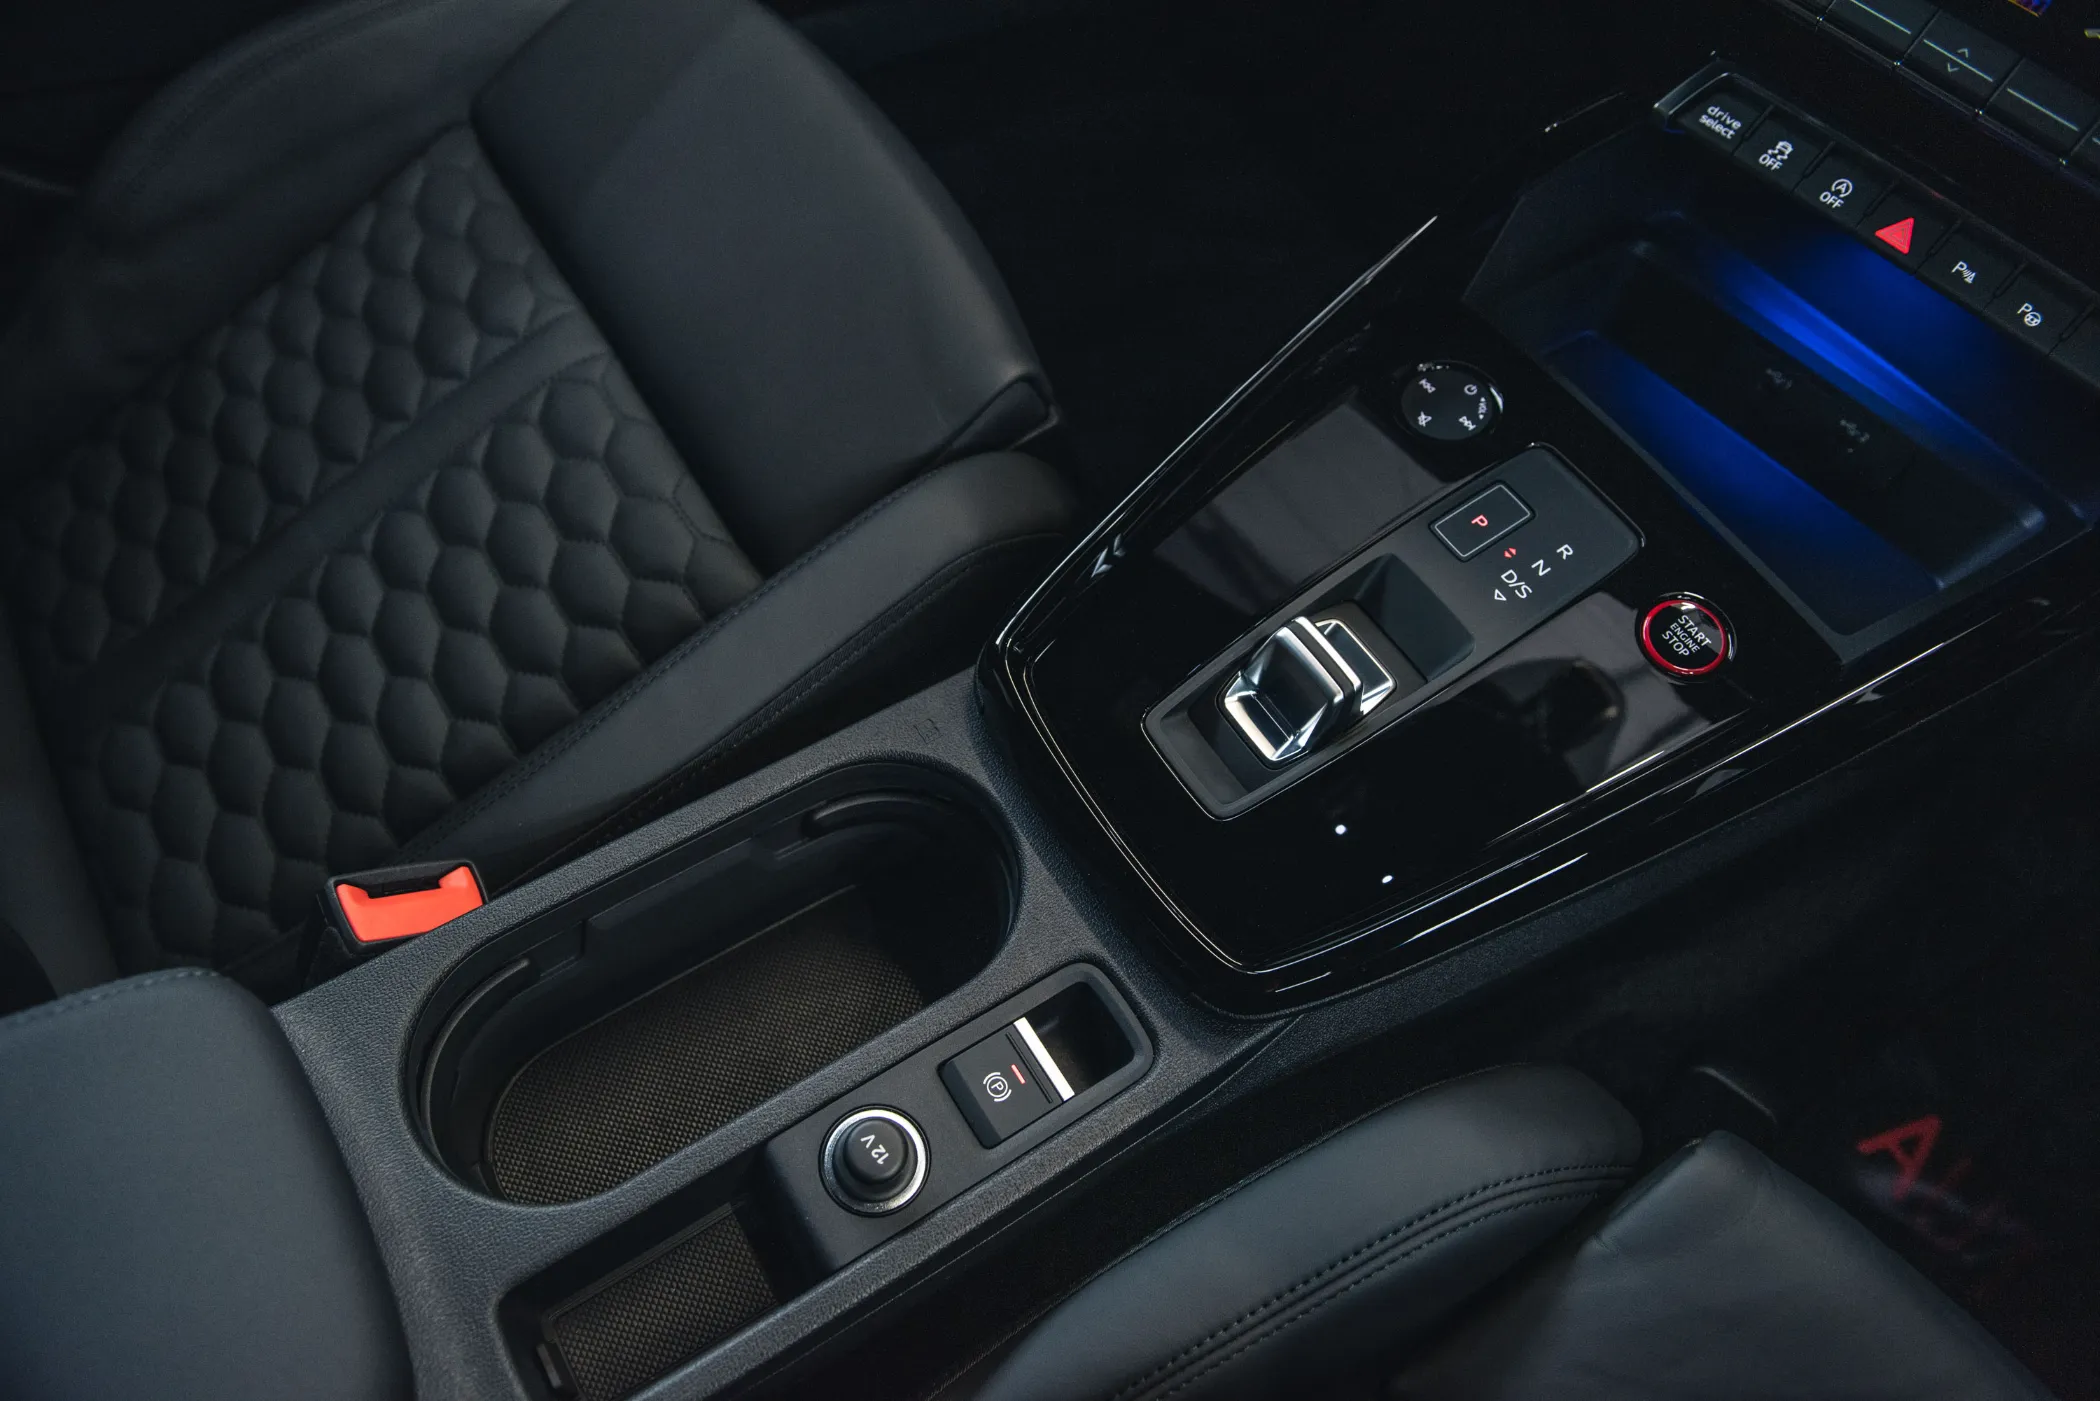 Funda protectora de coches interior Audi RS3 Sportback 8Y - Coverlux©